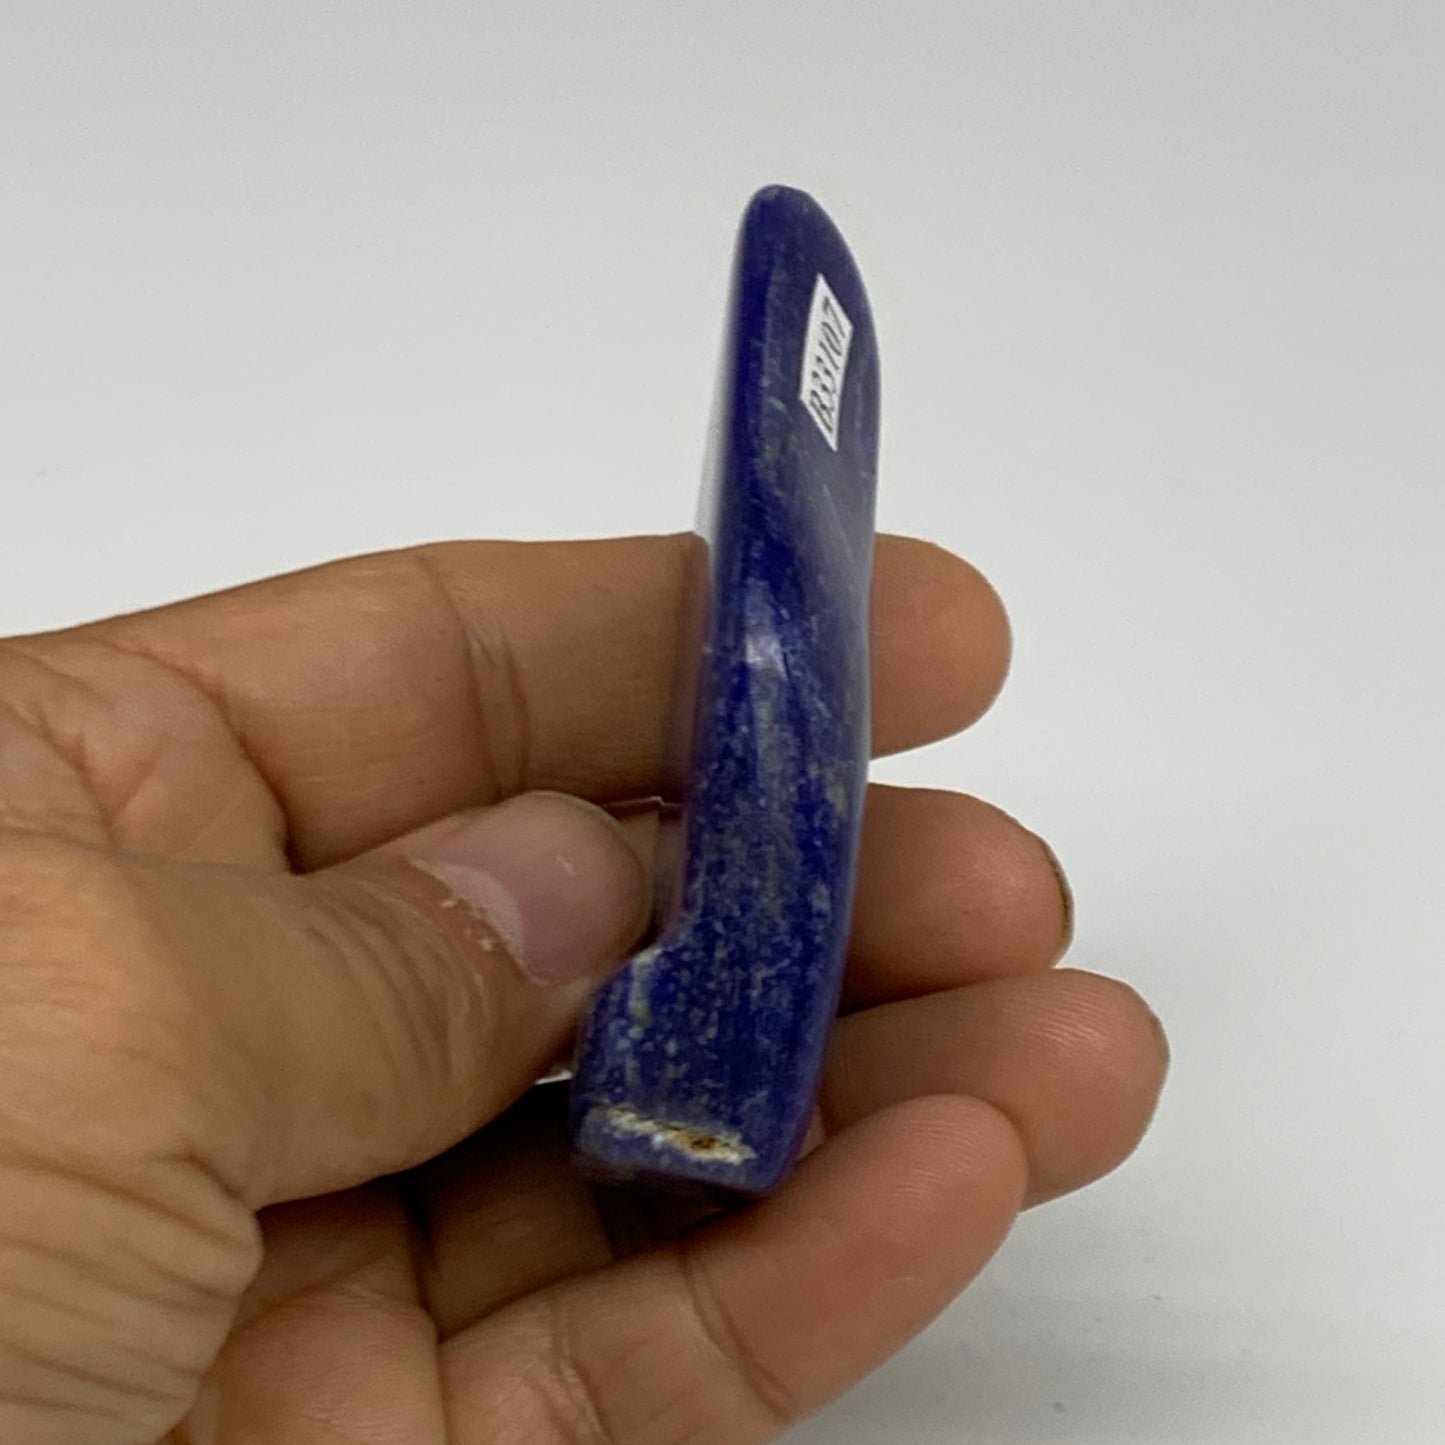 63.4g, 2.7"x1.6"x0.6",  Natural Freeform Lapis Lazuli from Afghanistan, B33107